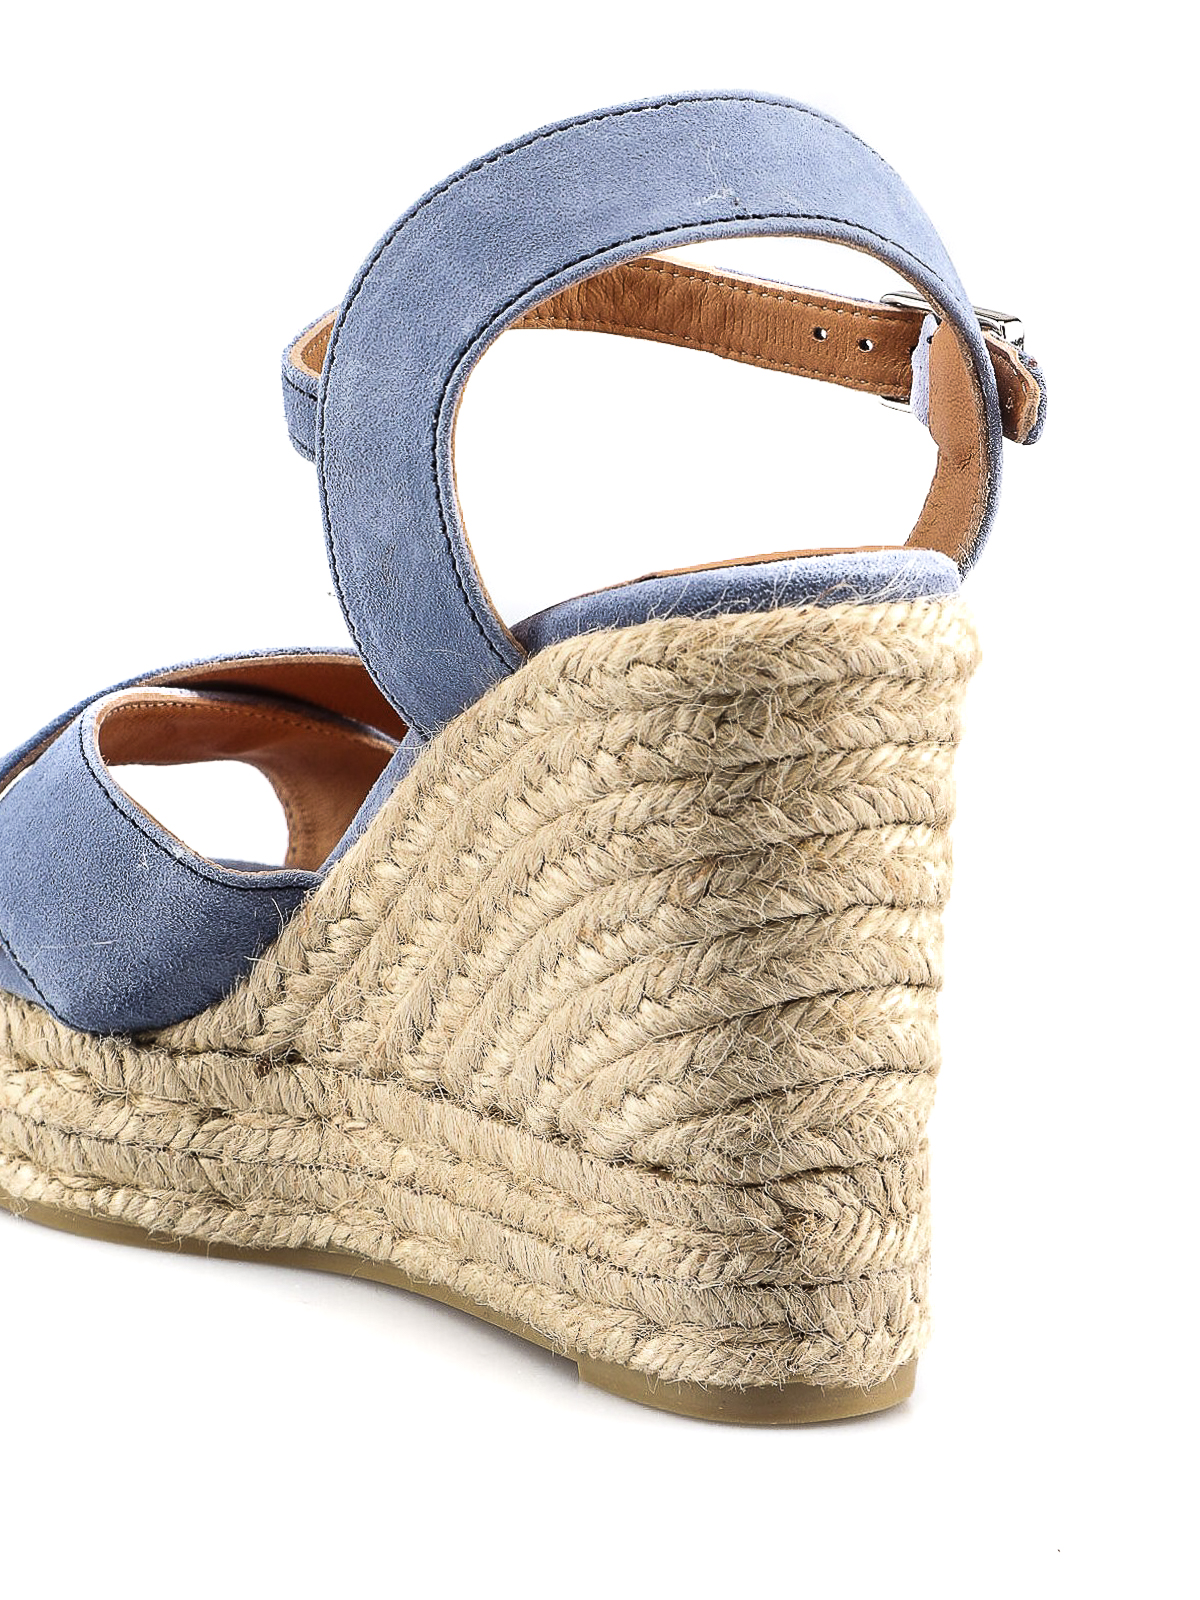 Castaner Women's Blaudell Wedge Sandals